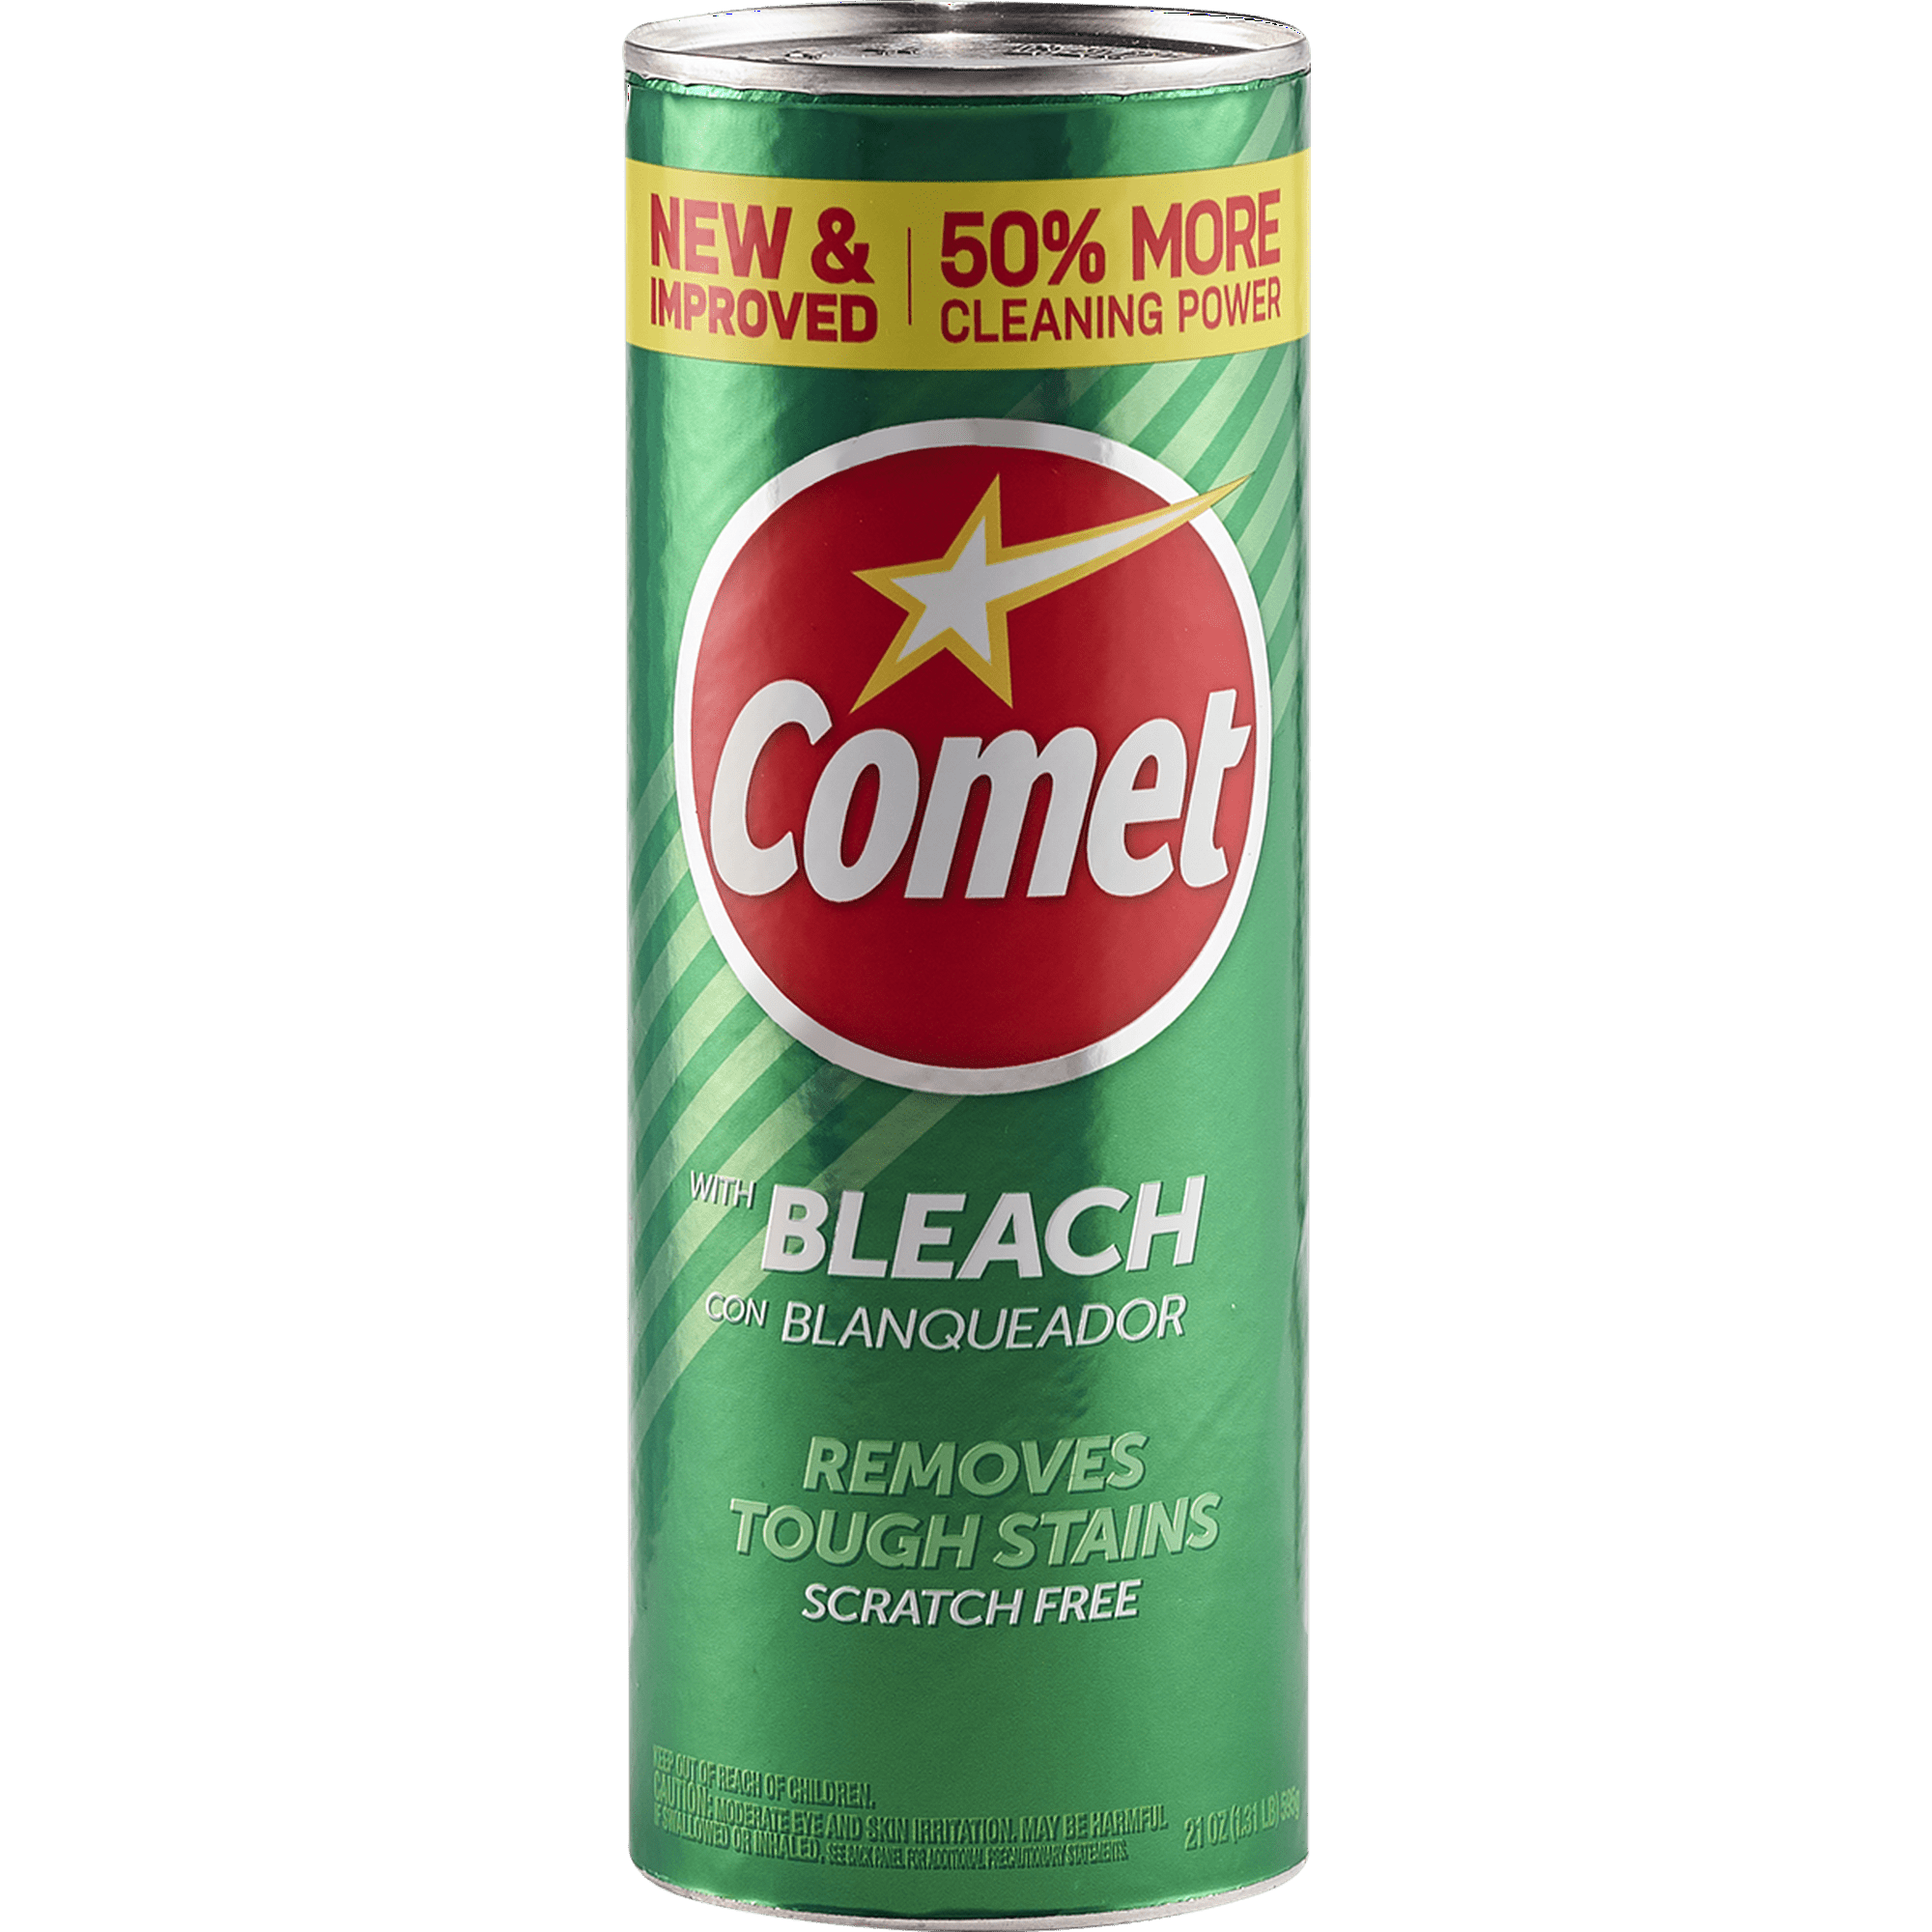 Bleach Cleanser online